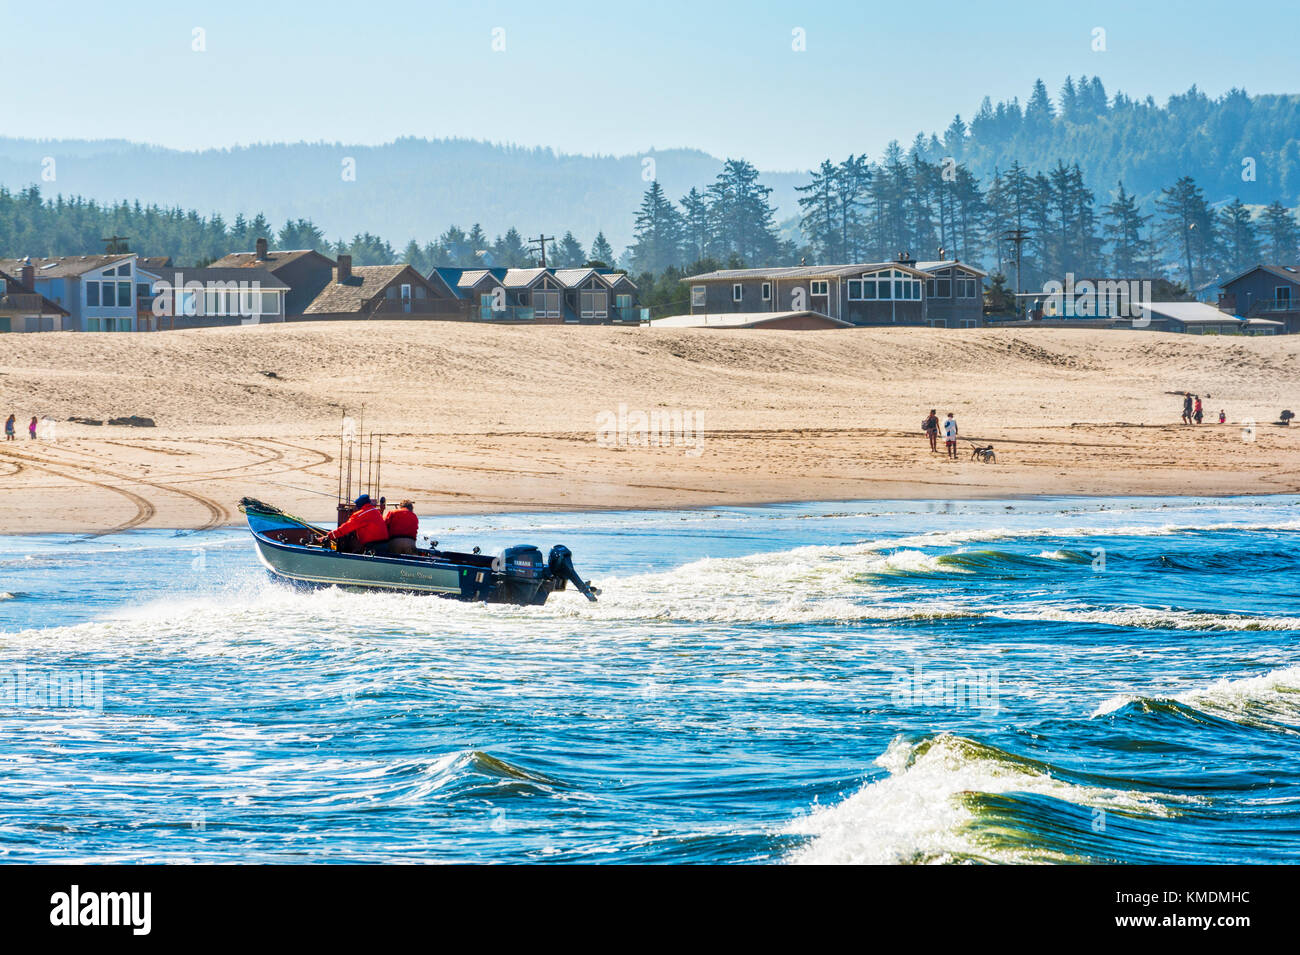 Pacific City, Oregon, USA - July 2, 2015: A dory boat lands on the beach at Cape Kiwanda, Pacific City, Oregon Stock Photo